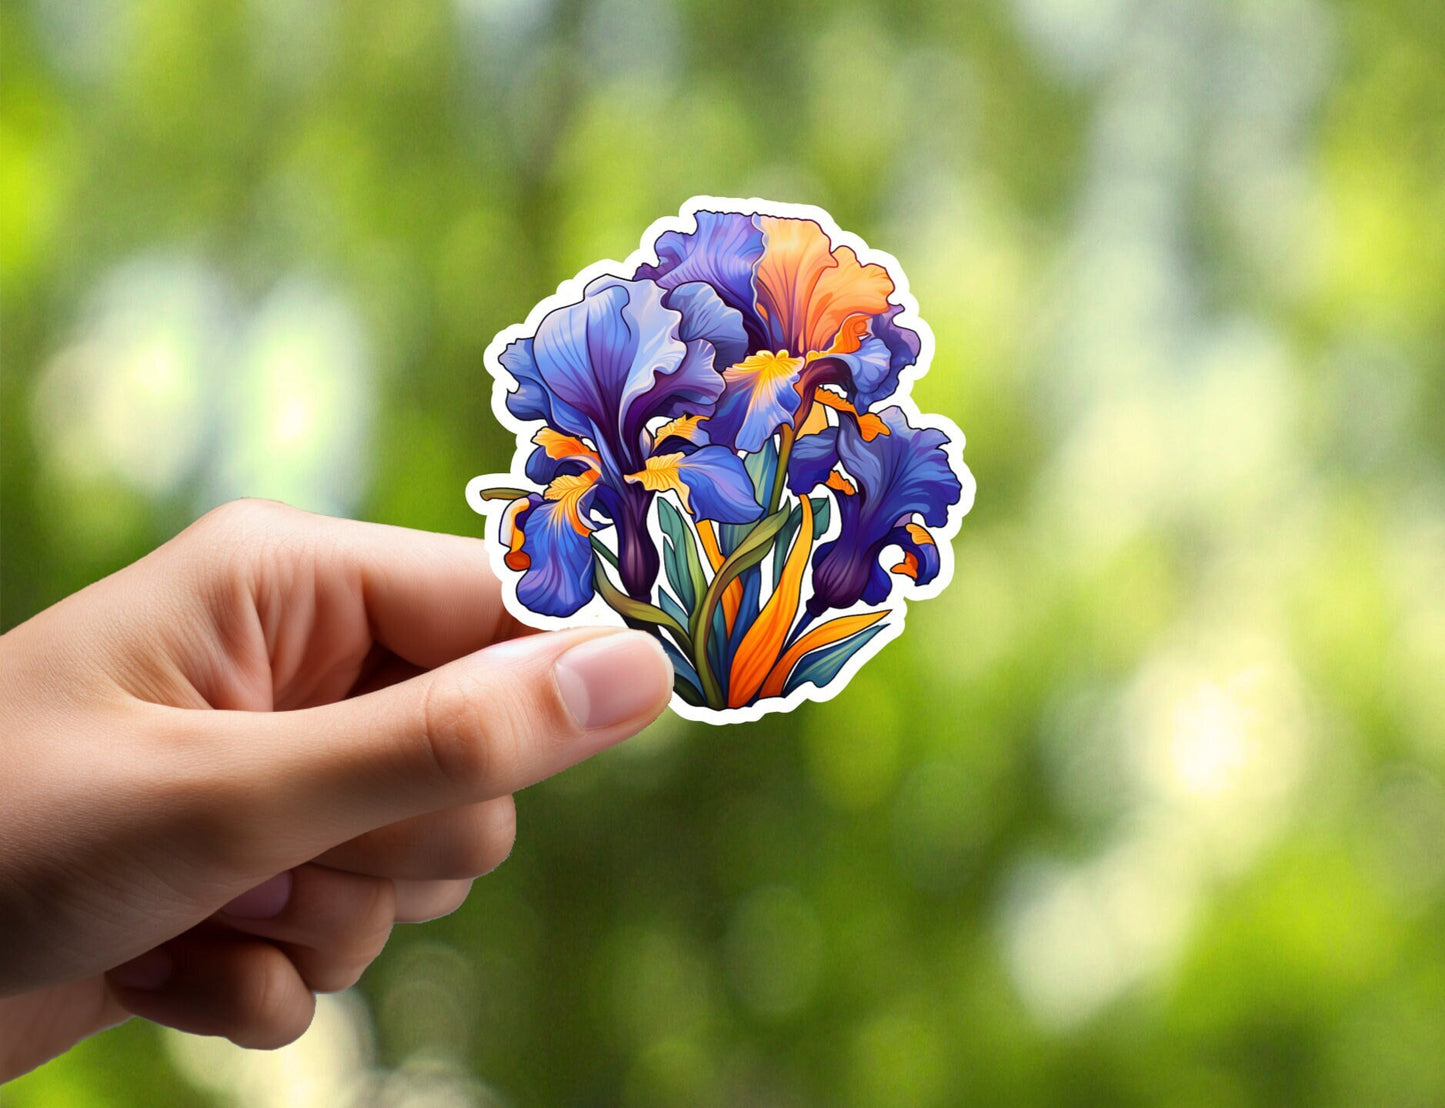 Irises Sticker